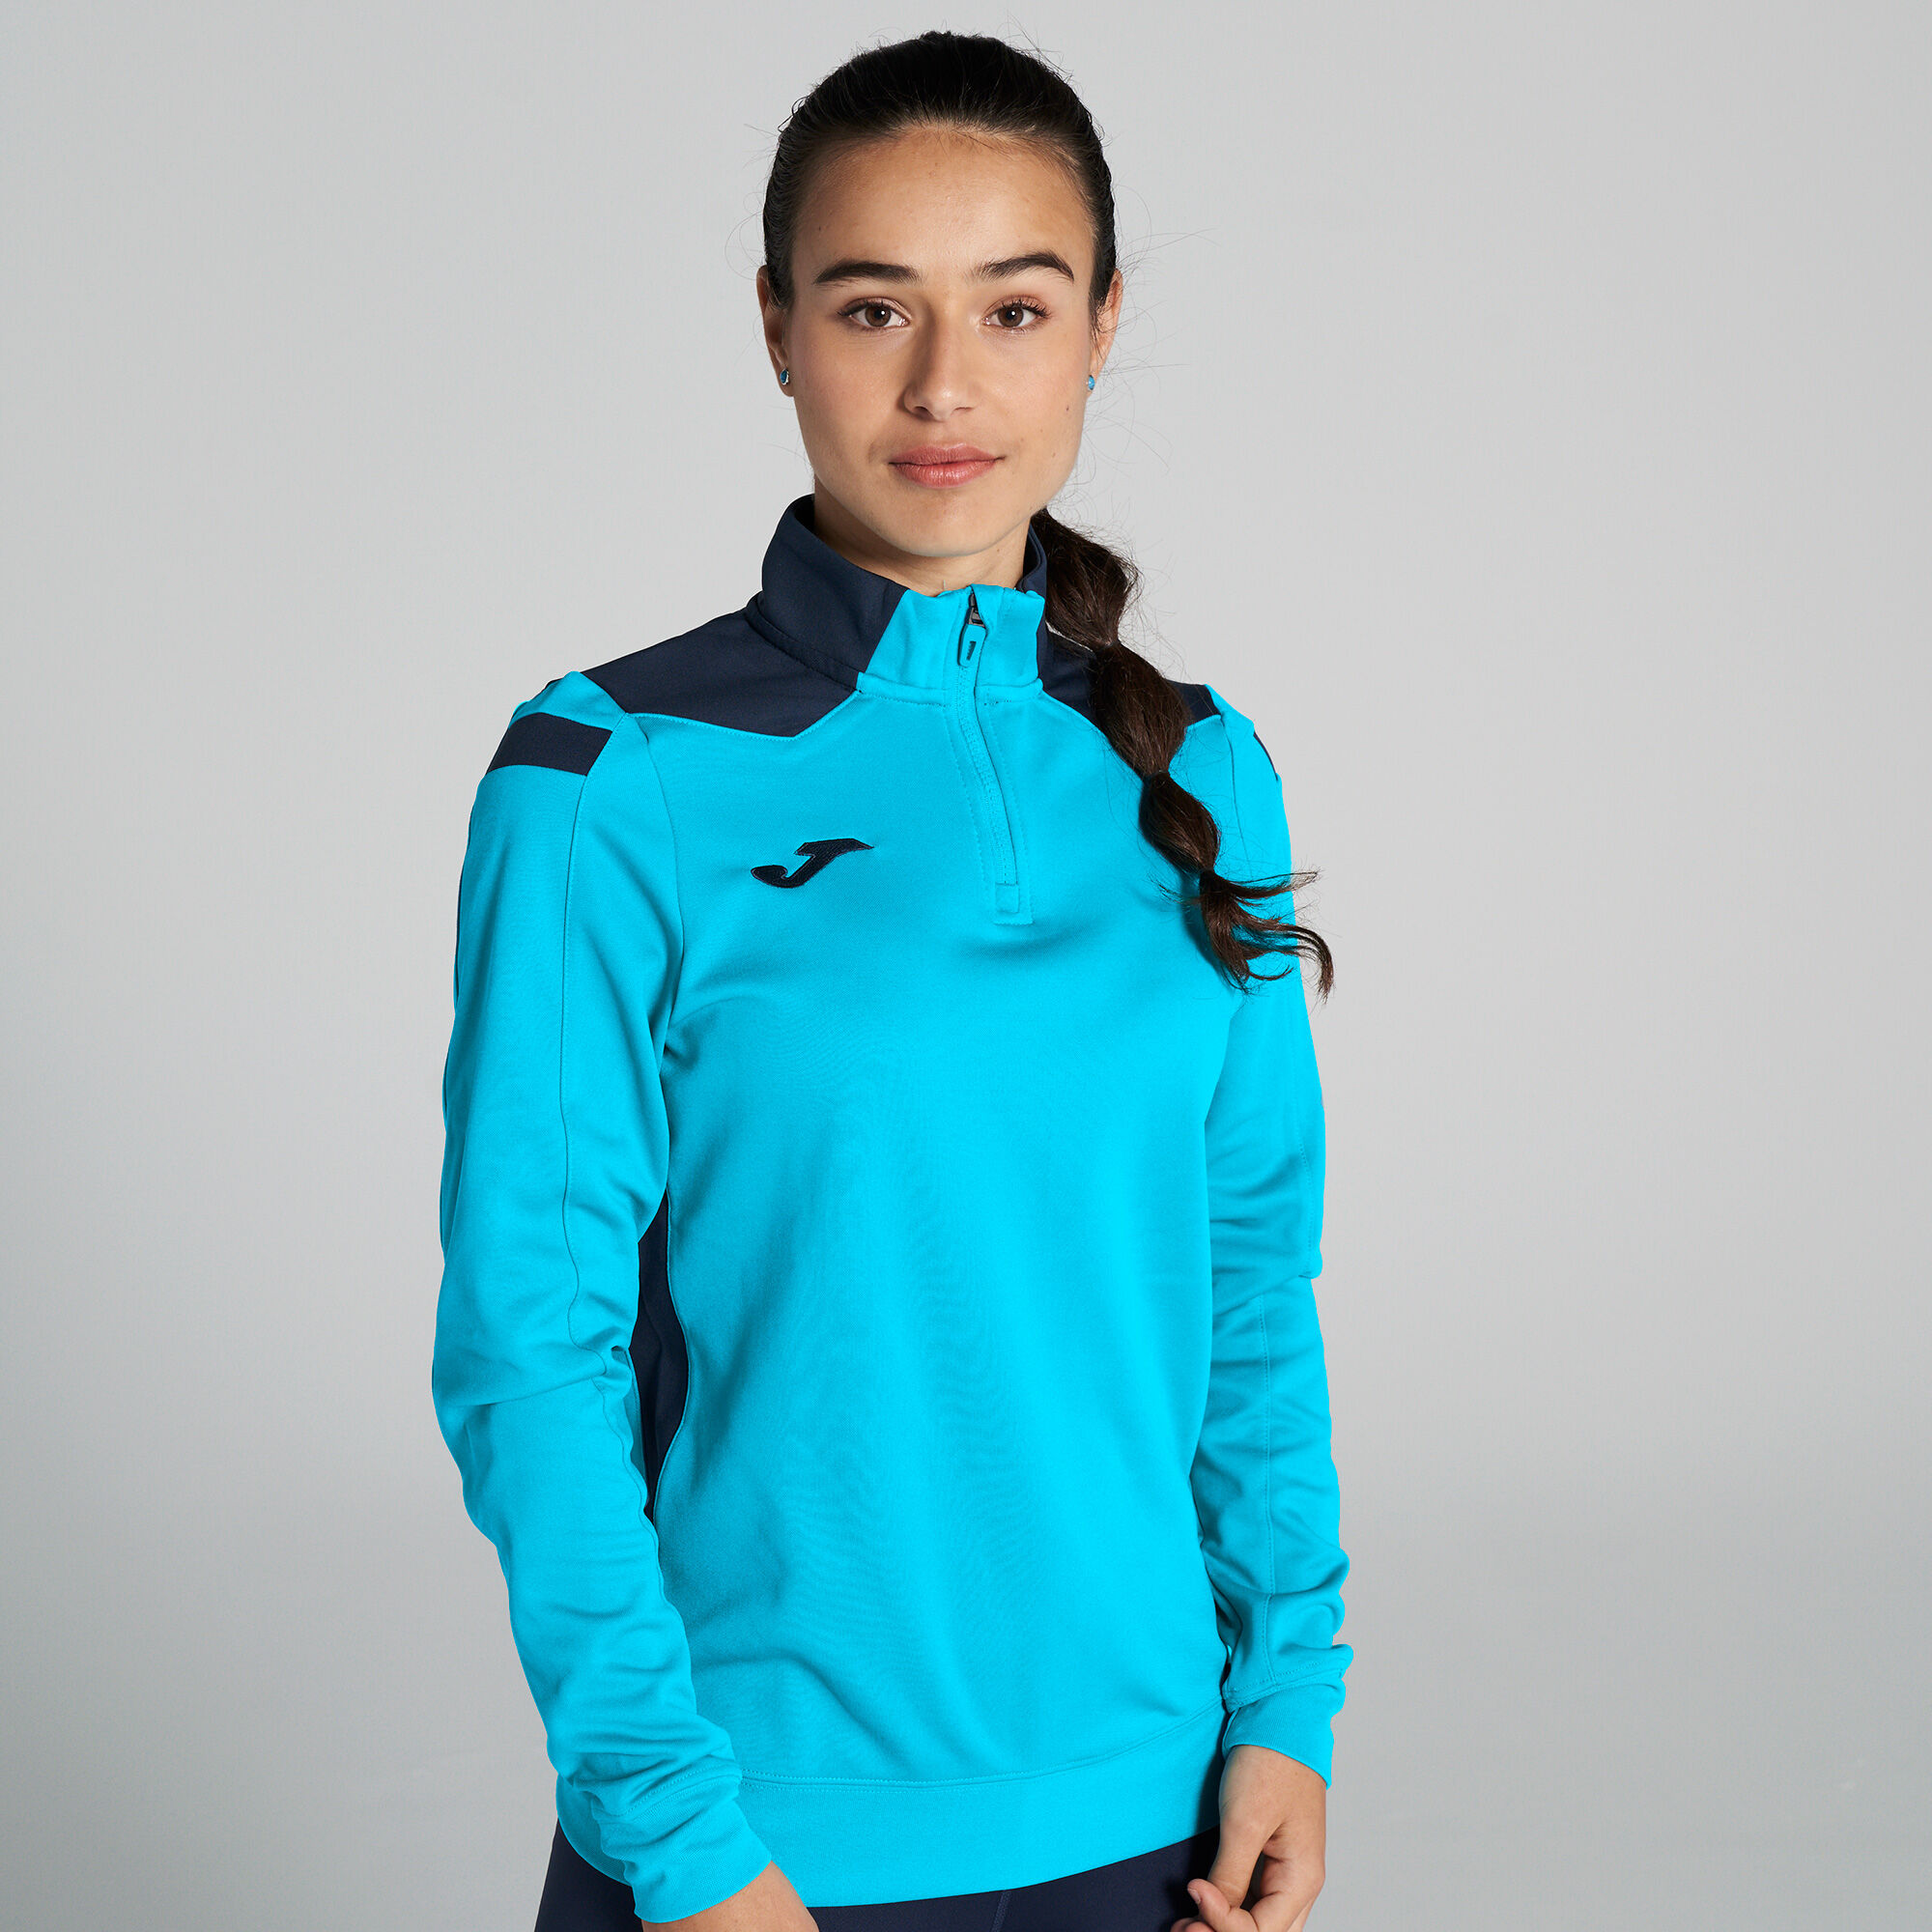 Sweat-shirt femme Championship VI turquoise fluo bleu marine